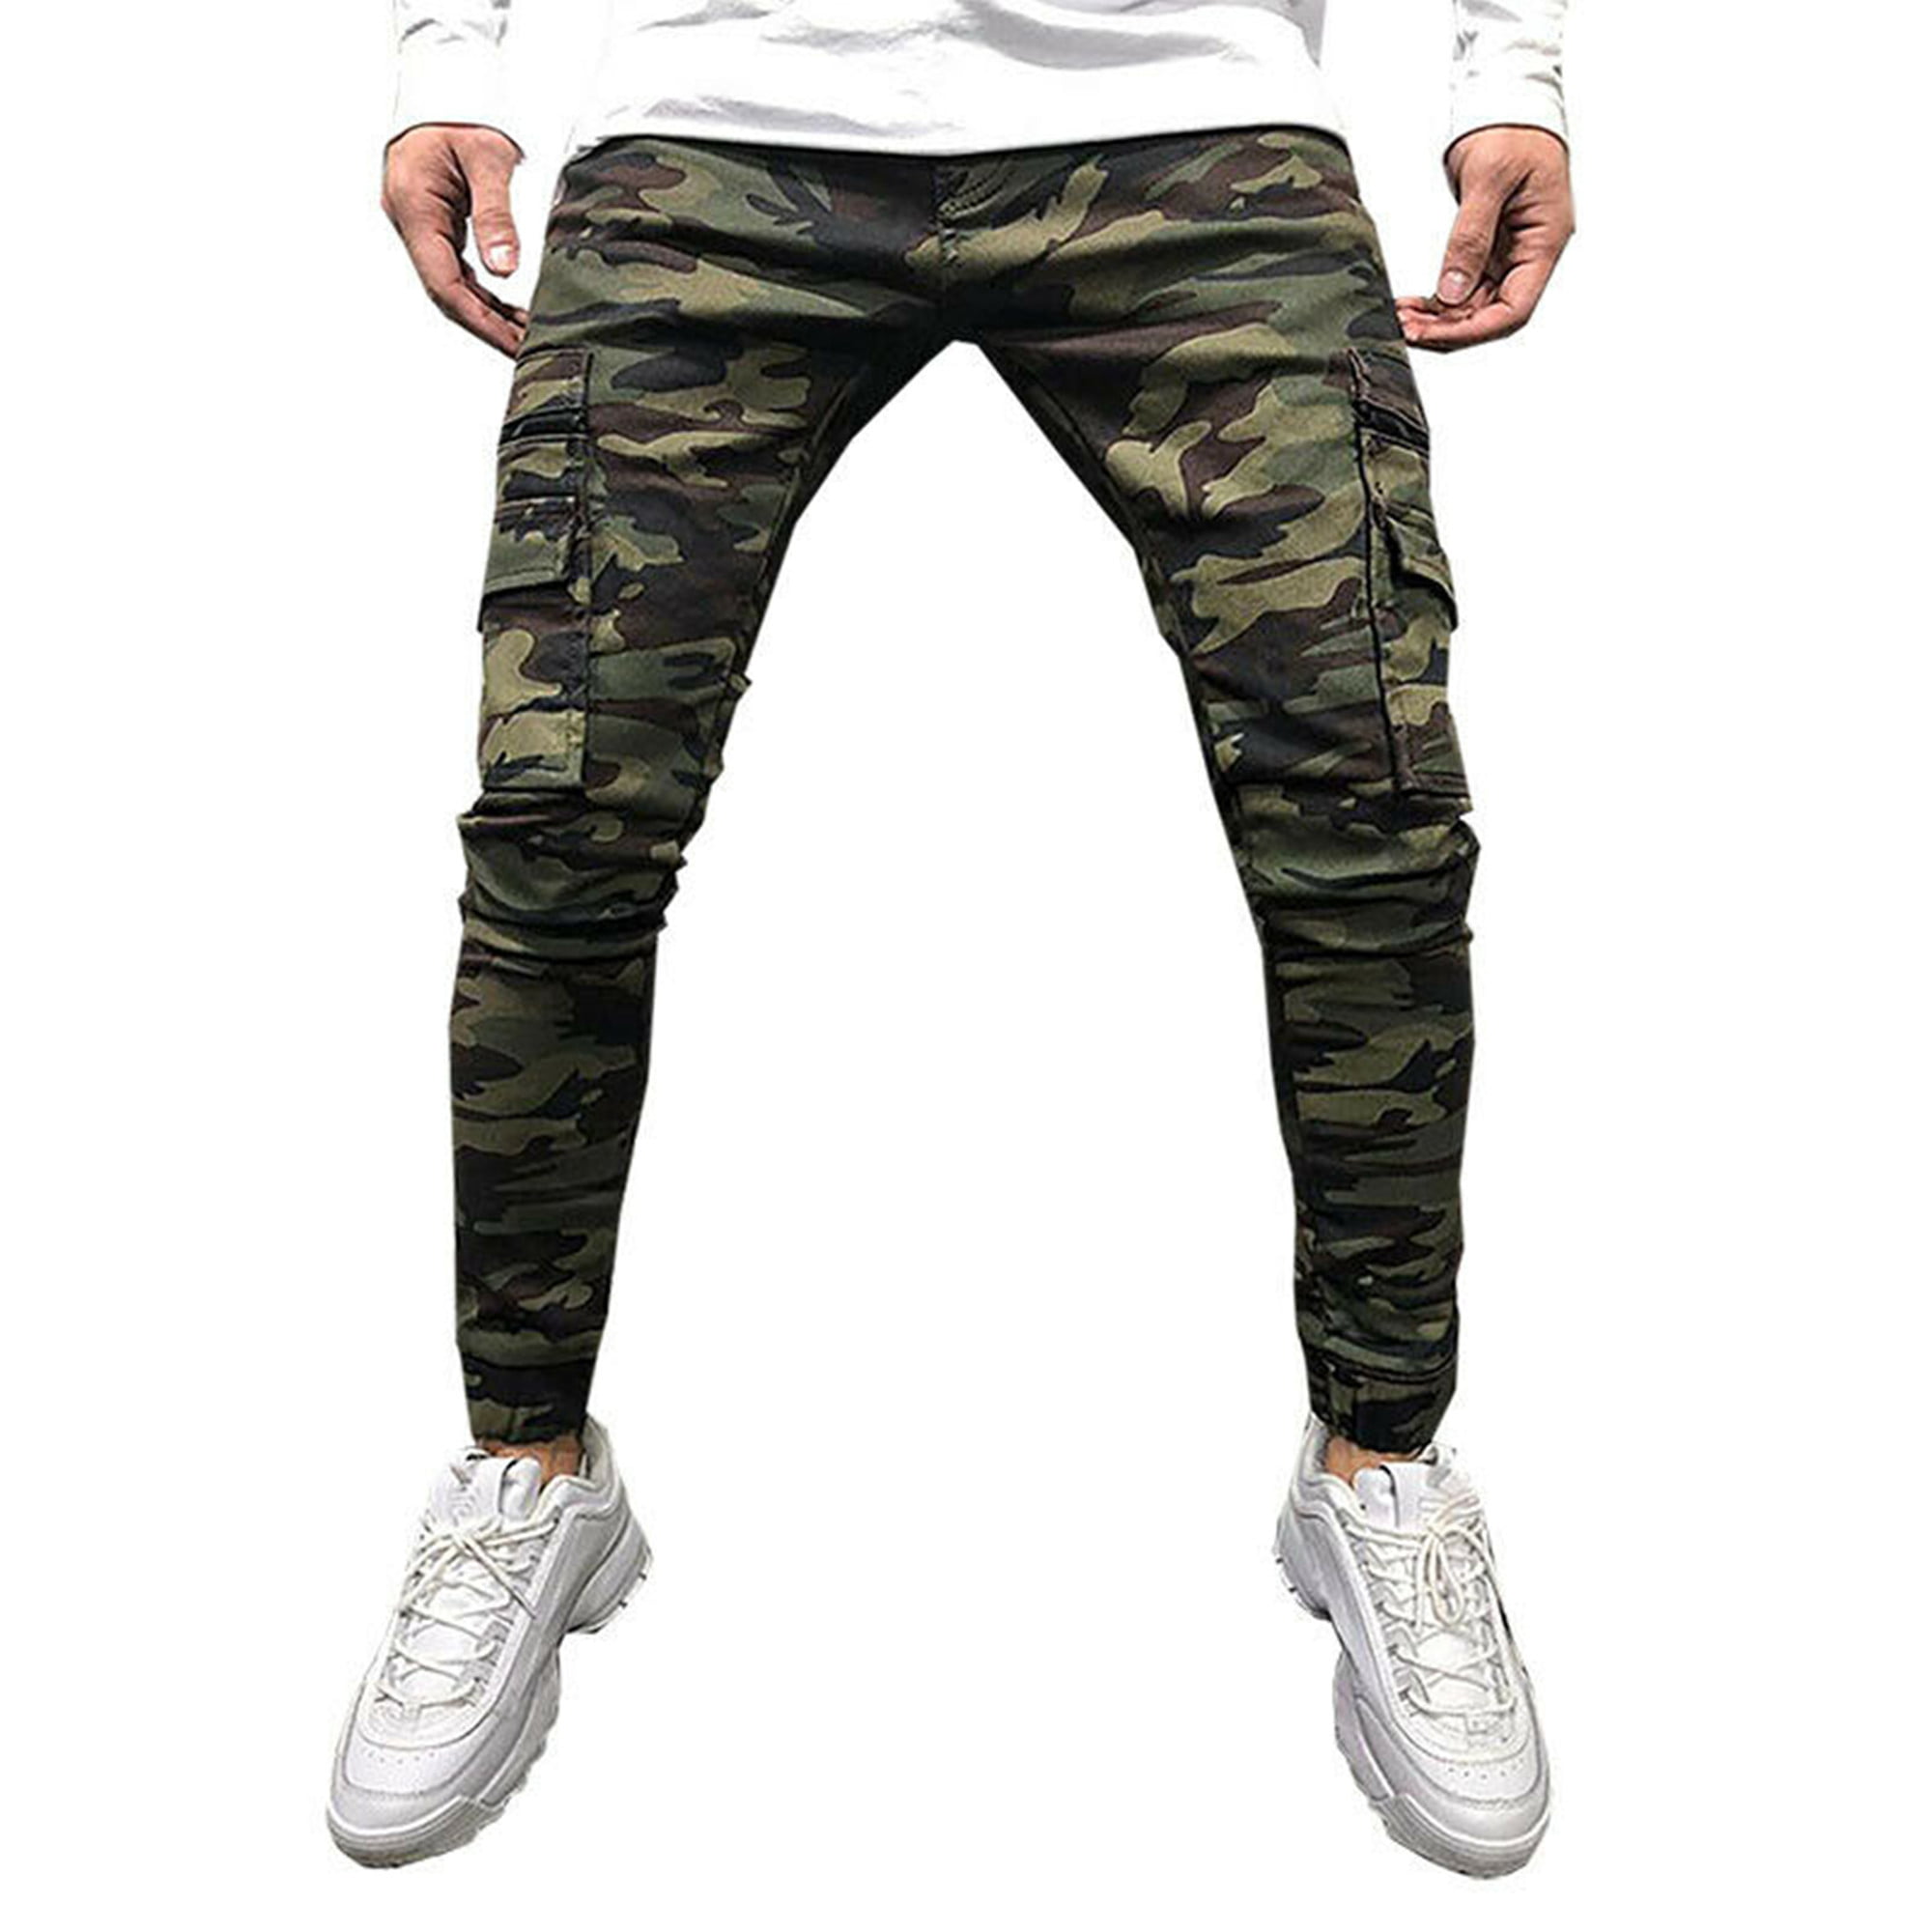 HANMEN Men's Camo Tactical Combat Jeans Army Military Work Denim Pants Slim Fit Skinny Casual Trousers Multi-Pockets Bottoms&nbsp;Army Green&nbsp;28 - Walmart.com